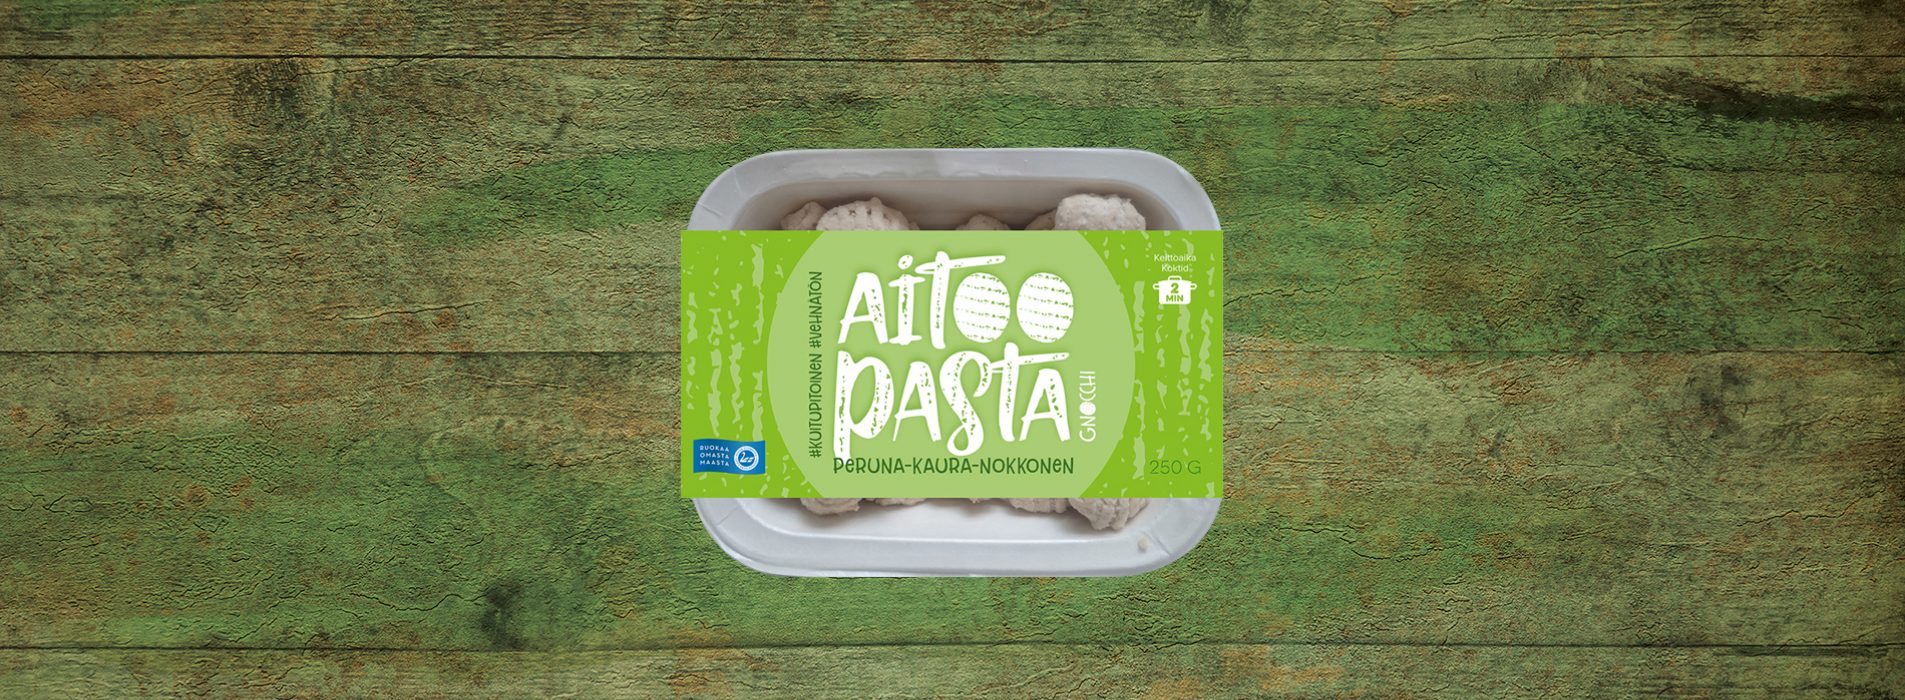 Aitoo-Pasta Peruna-Kaura-Nokkonen pakkaus